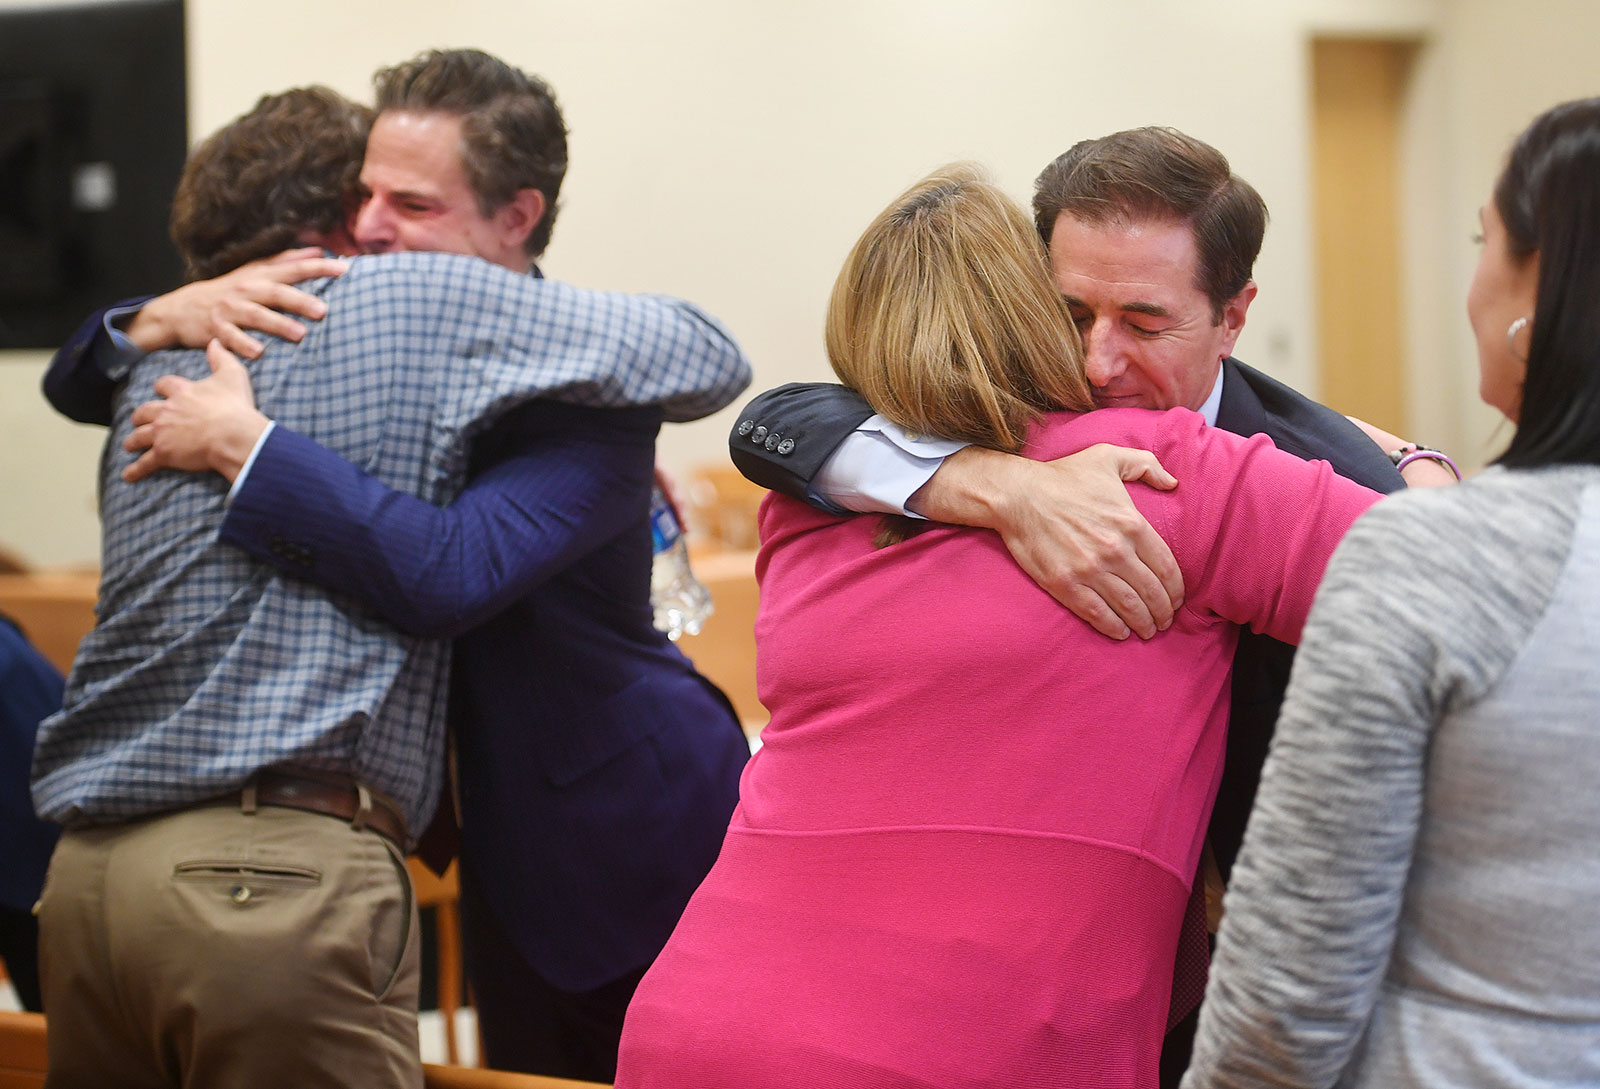 William Sherlach, left, hugs attorney Josh Koskoff while Nicole Hockley hugs attorney Chris Mattei following the jury verdict on Wednesday.